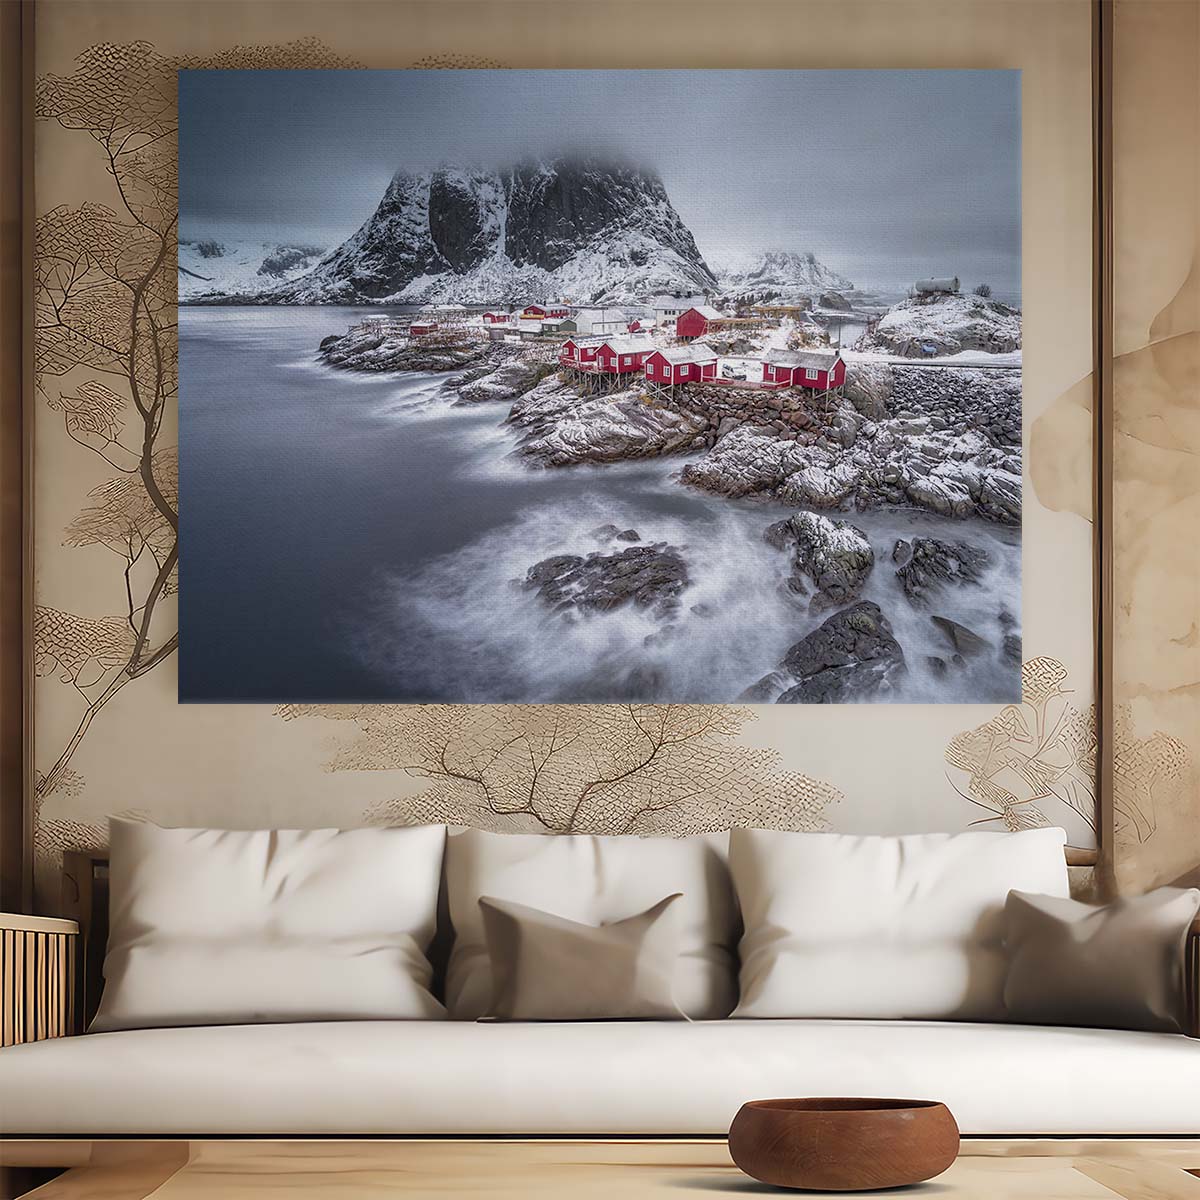 Lofoten Islands Winter Wonderland Seascape Wall Art by Luxuriance Designs. Made in USA.